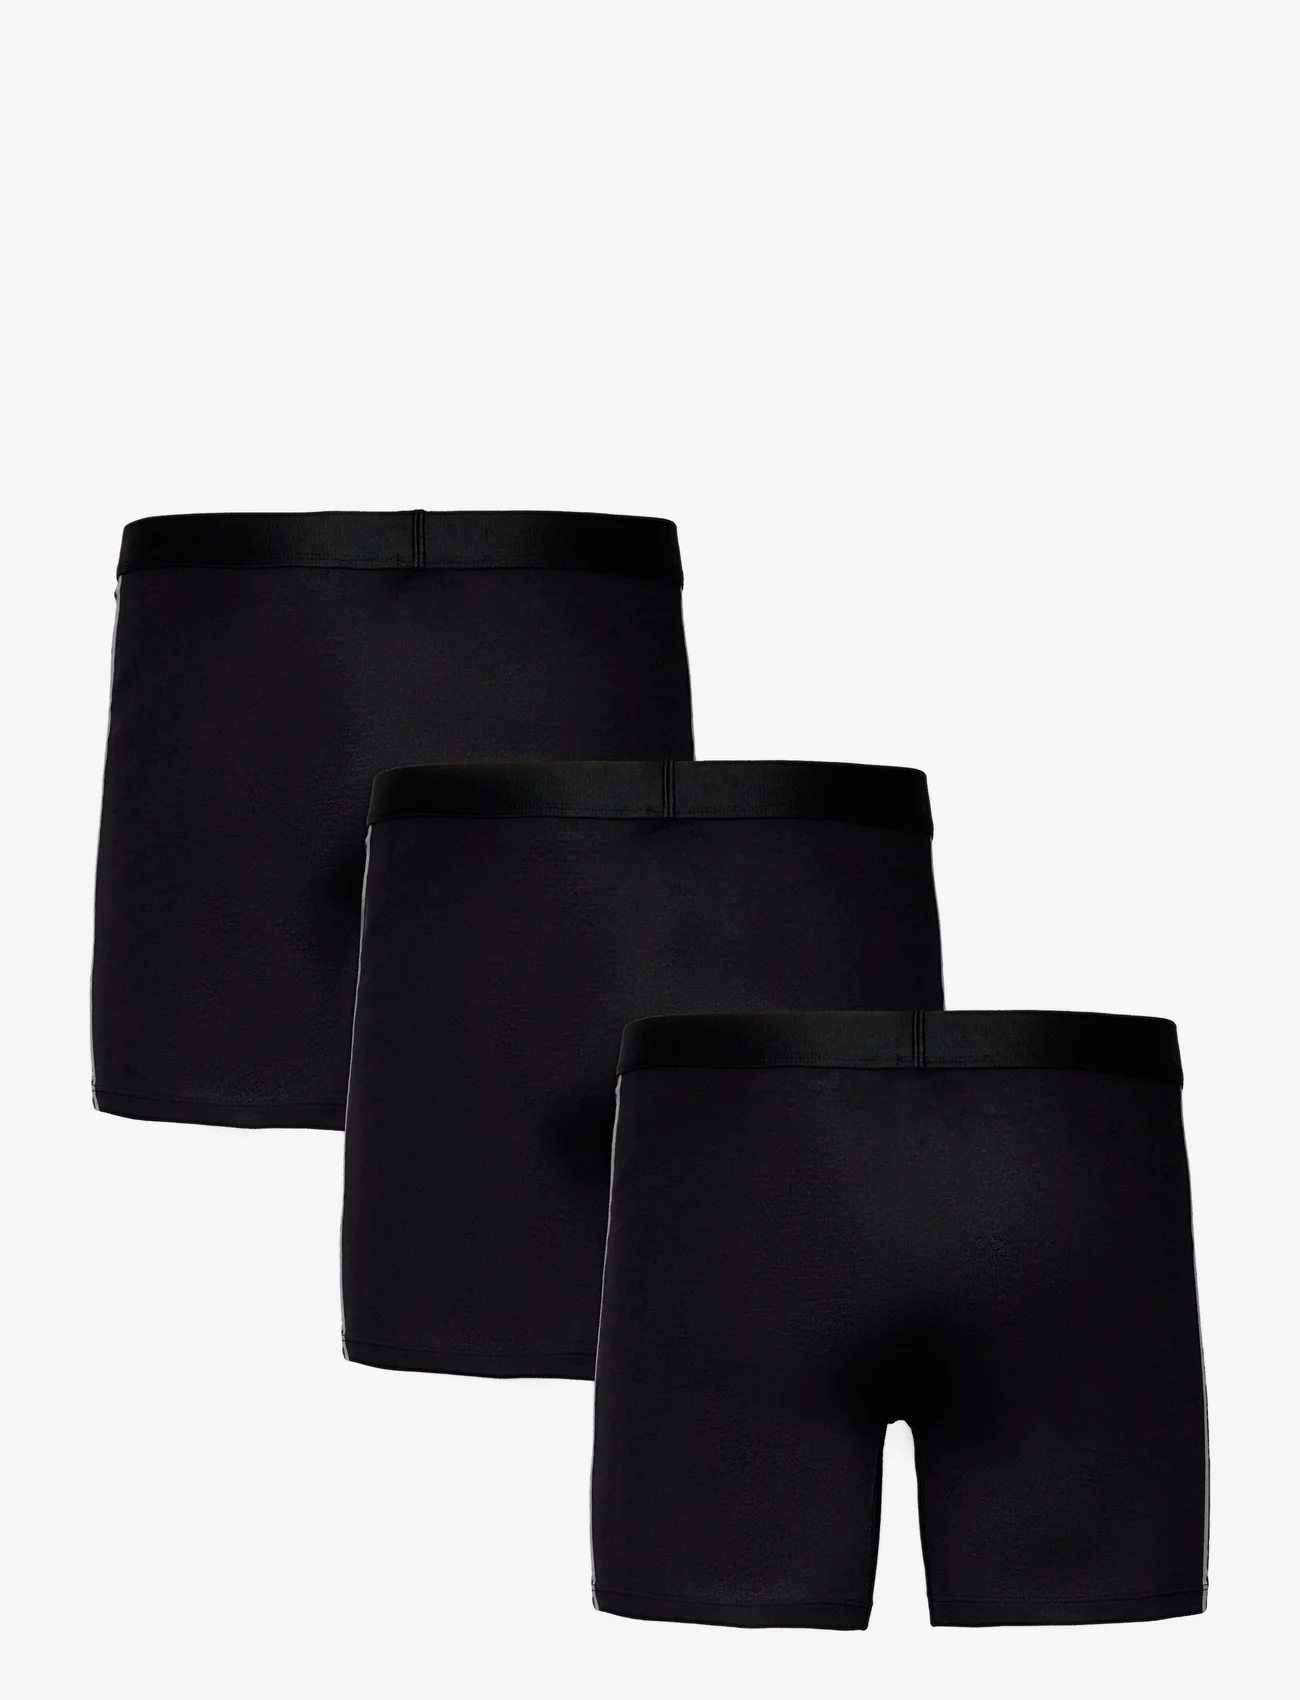 adidas Underwear - Shorts - zemākās cenas - black - 1